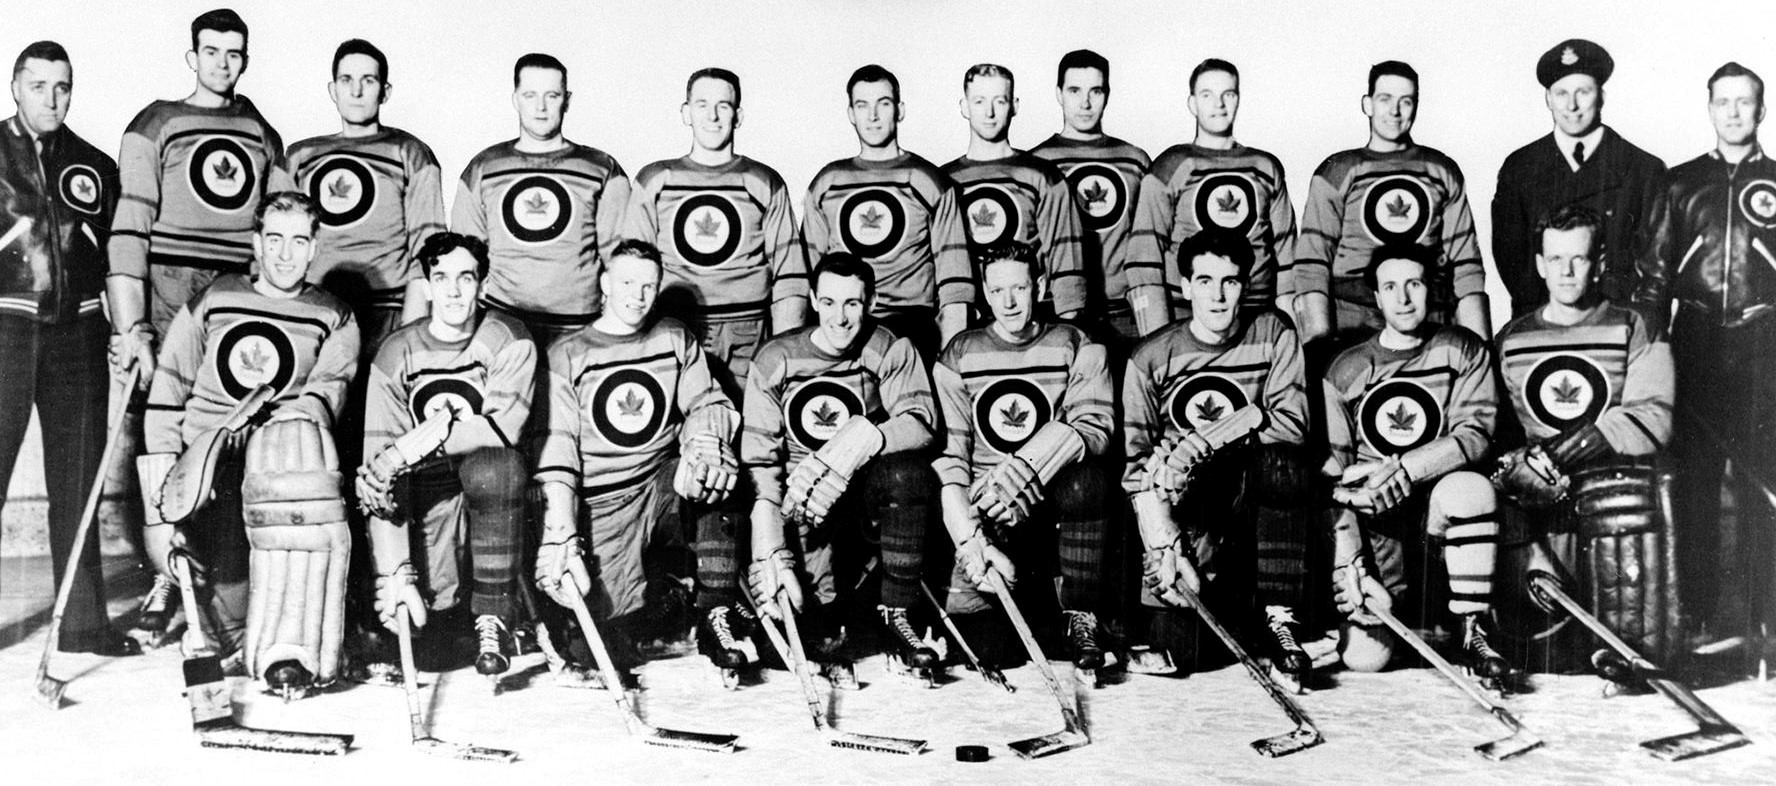 Royal Canadian Air Force Flyers Hockey Team of 1948